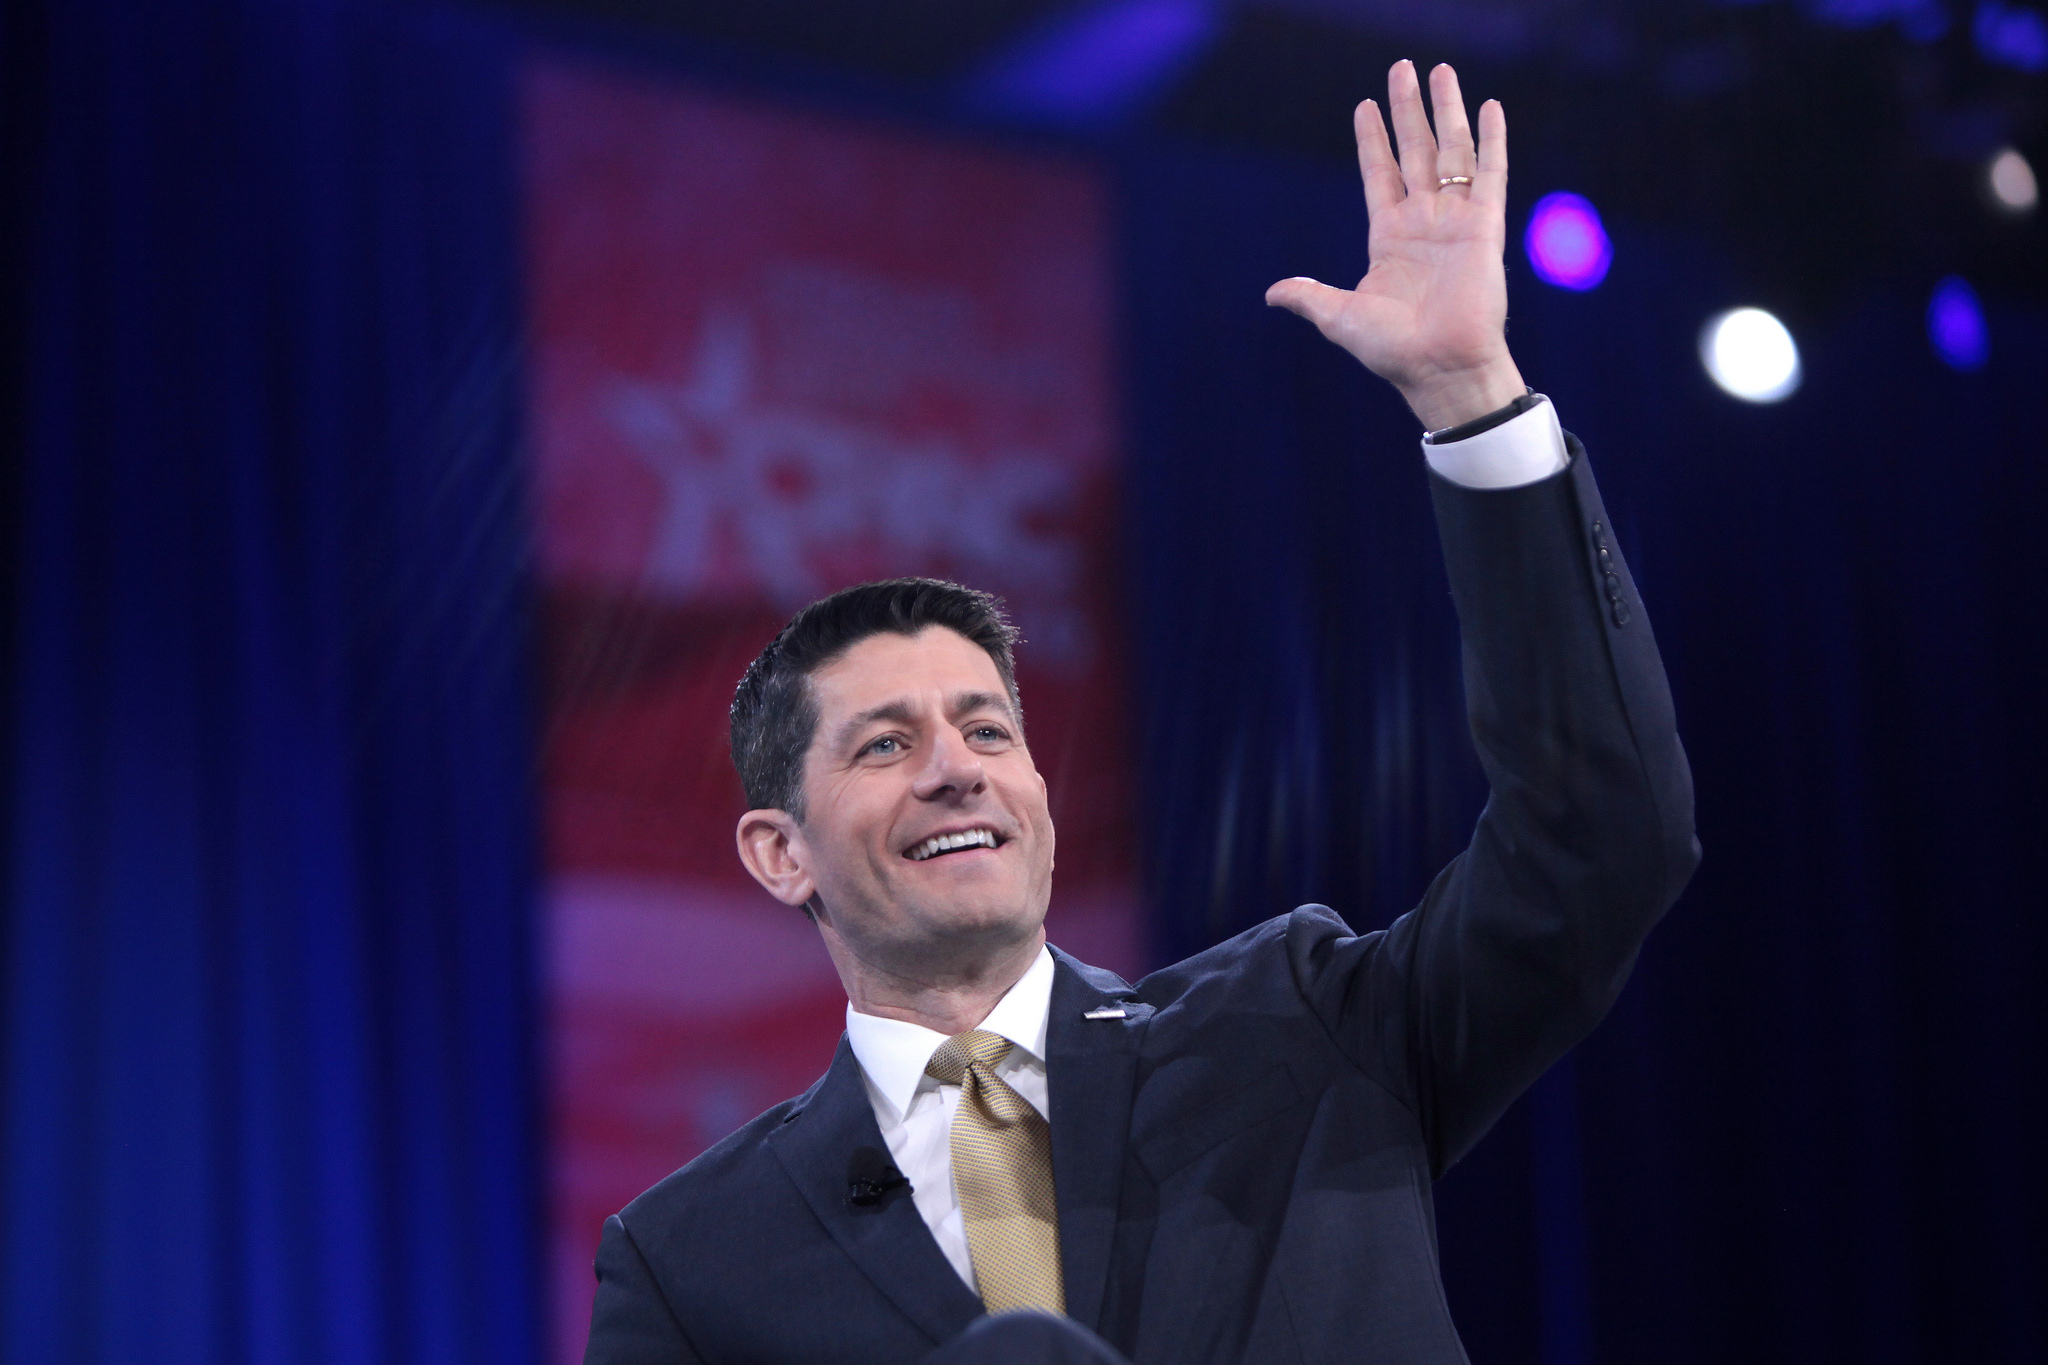 Republican leader Paul Ryan from Wisconsin won't seek re-election